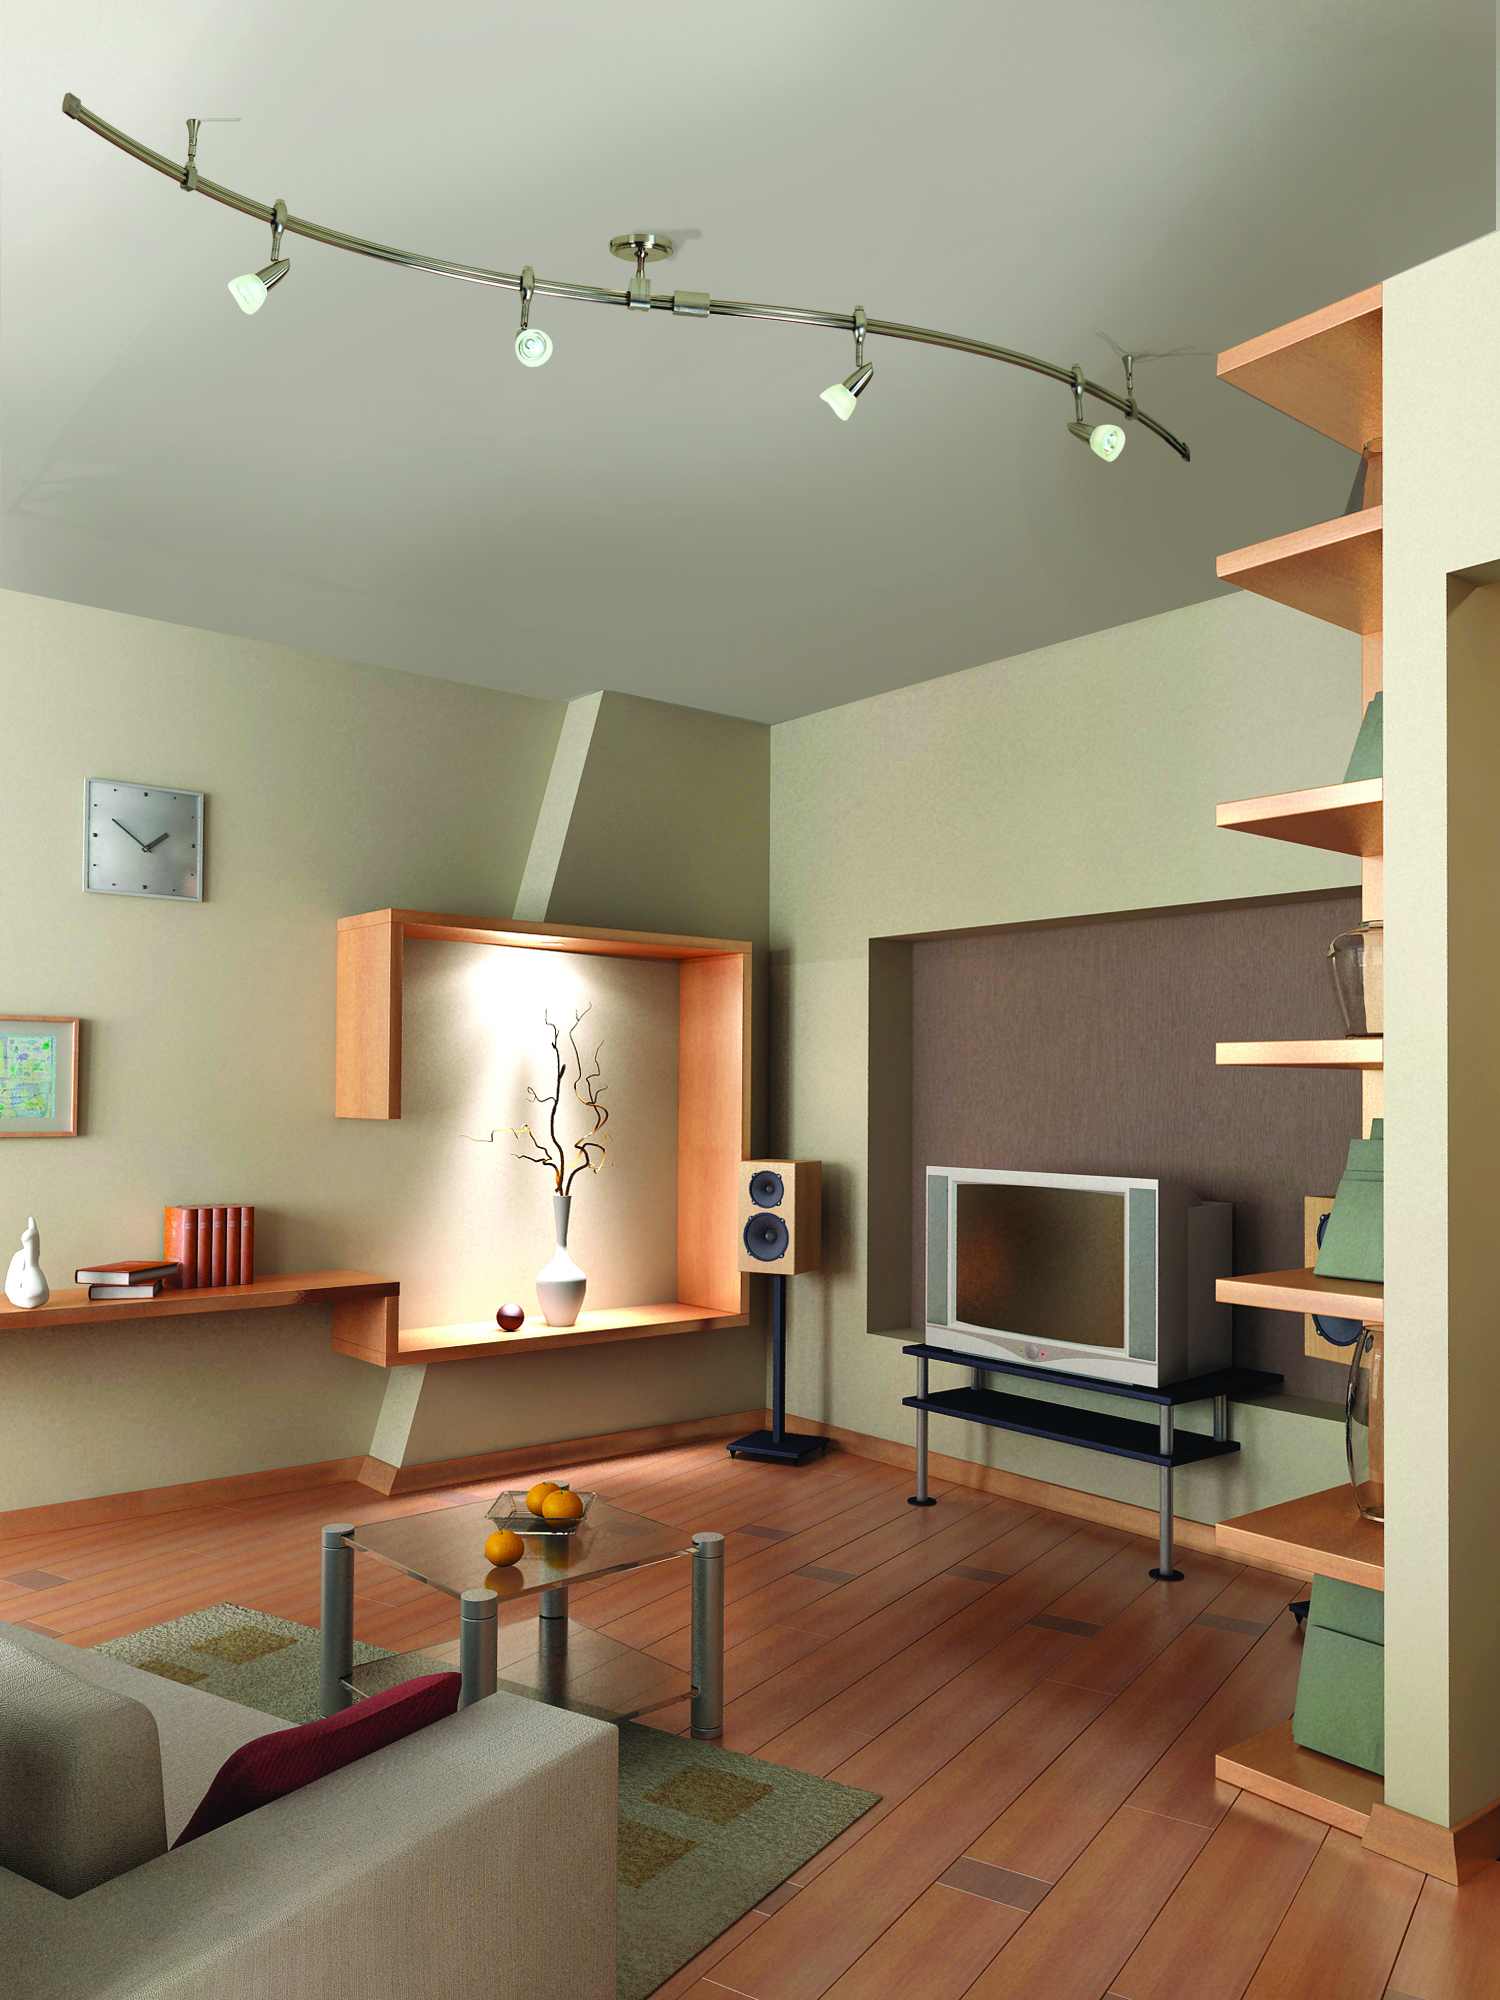 10 reasons to install Living room led ceiling lights | Warisan Lighting